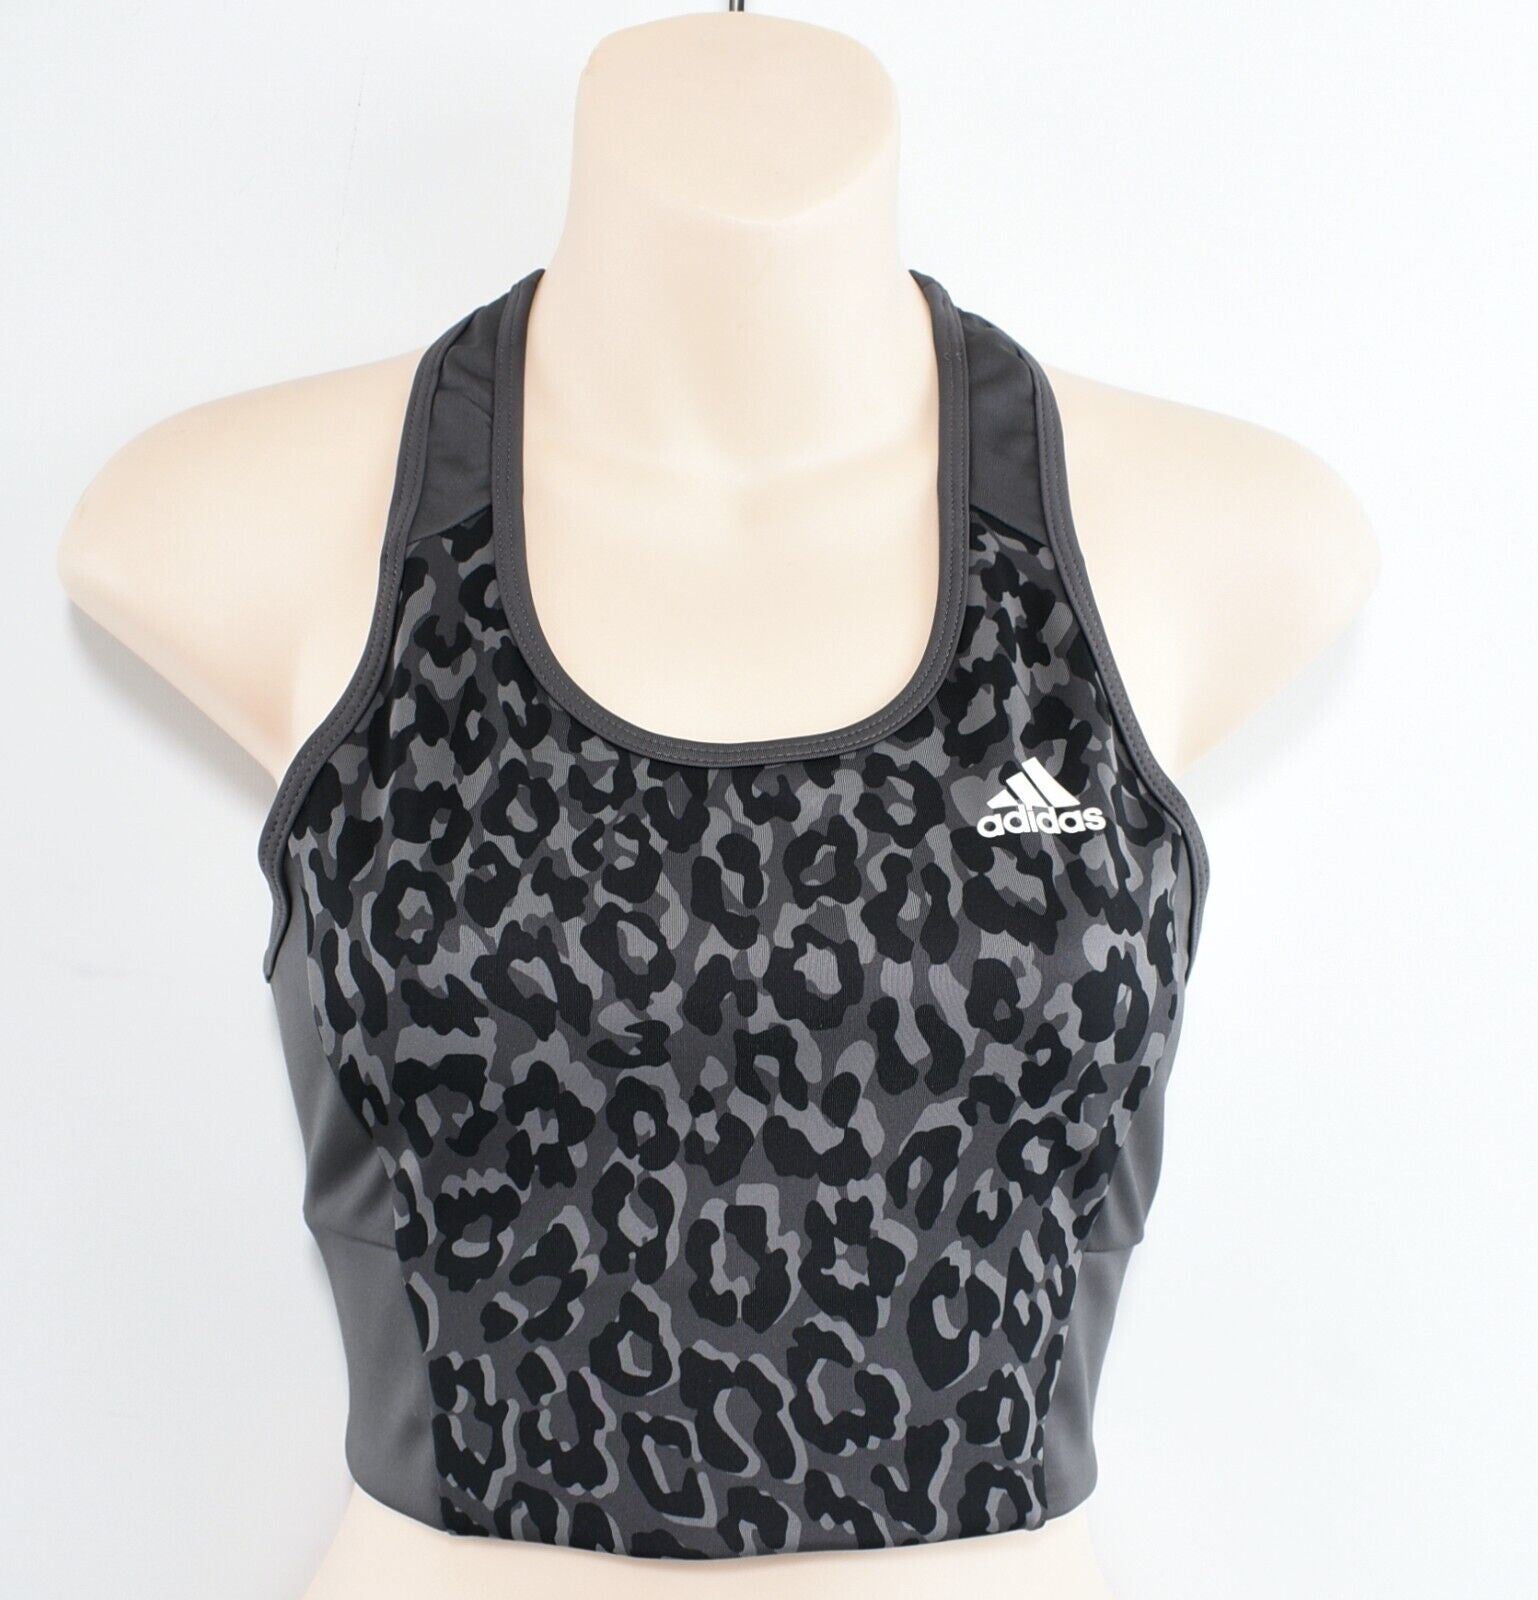 ADIDAS Women's Workout Gym Bra Top, Black/Grey Leopard Print, size M /UK 12-14